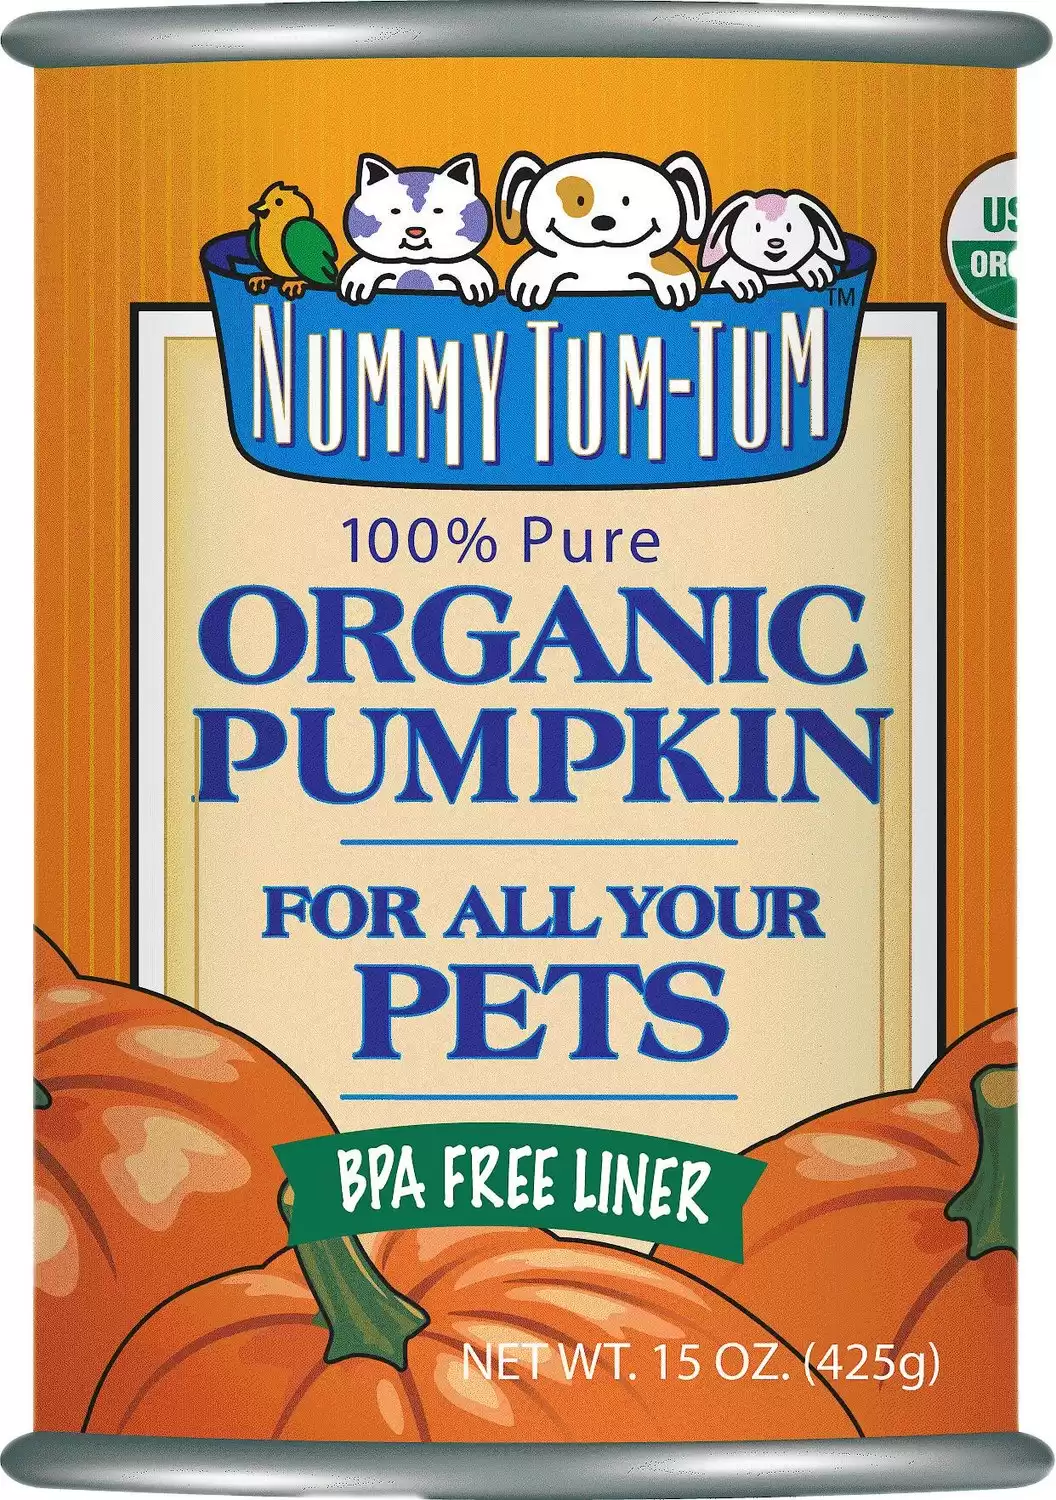 Nummy Tum-Tum Organic Pumpkin Canned Food Supplement